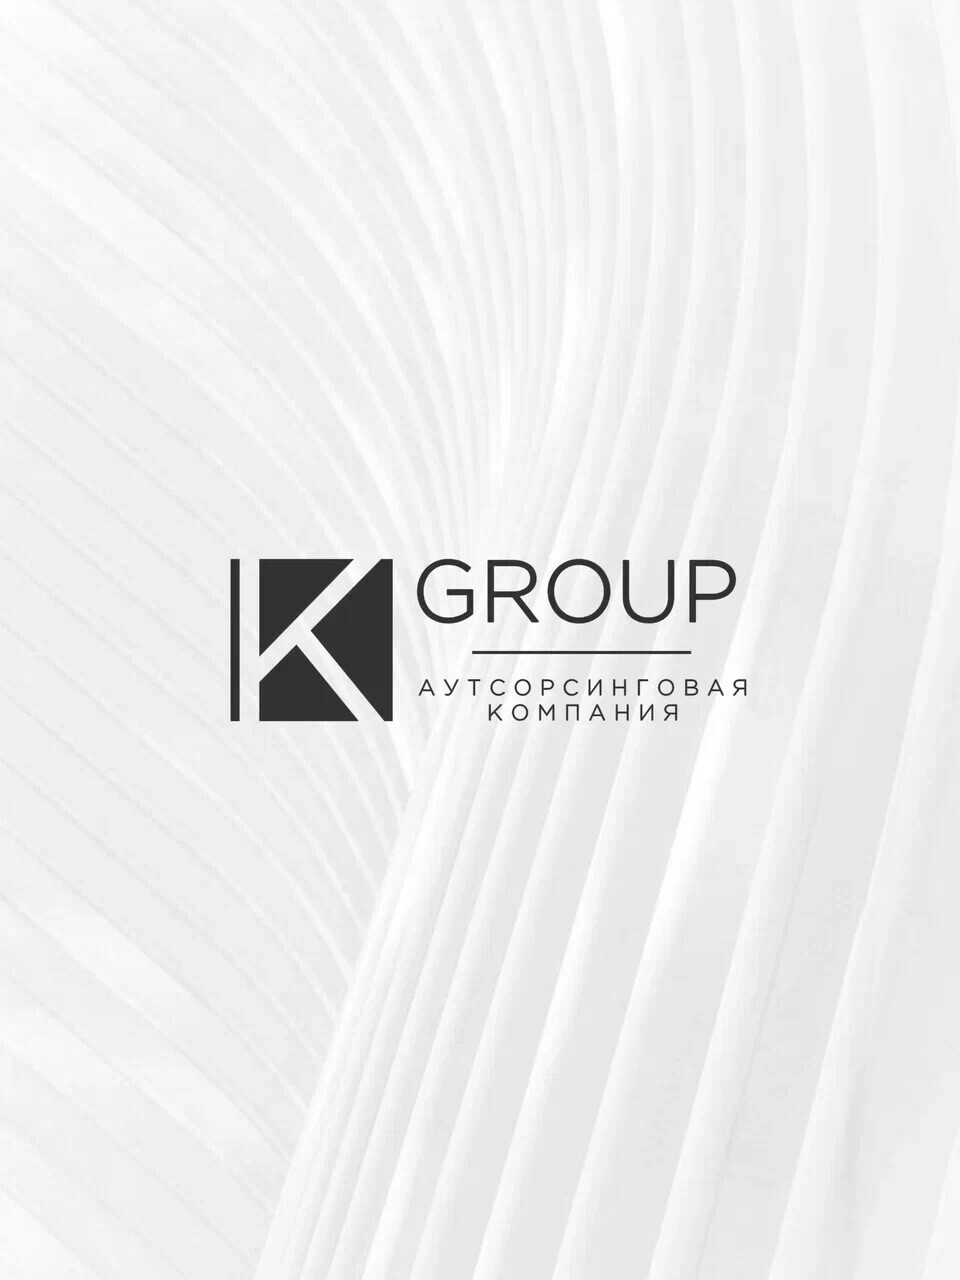 К-Group ➤ Кыргызстан ᐉ Бизнес-профиль компании на lalafo.kg